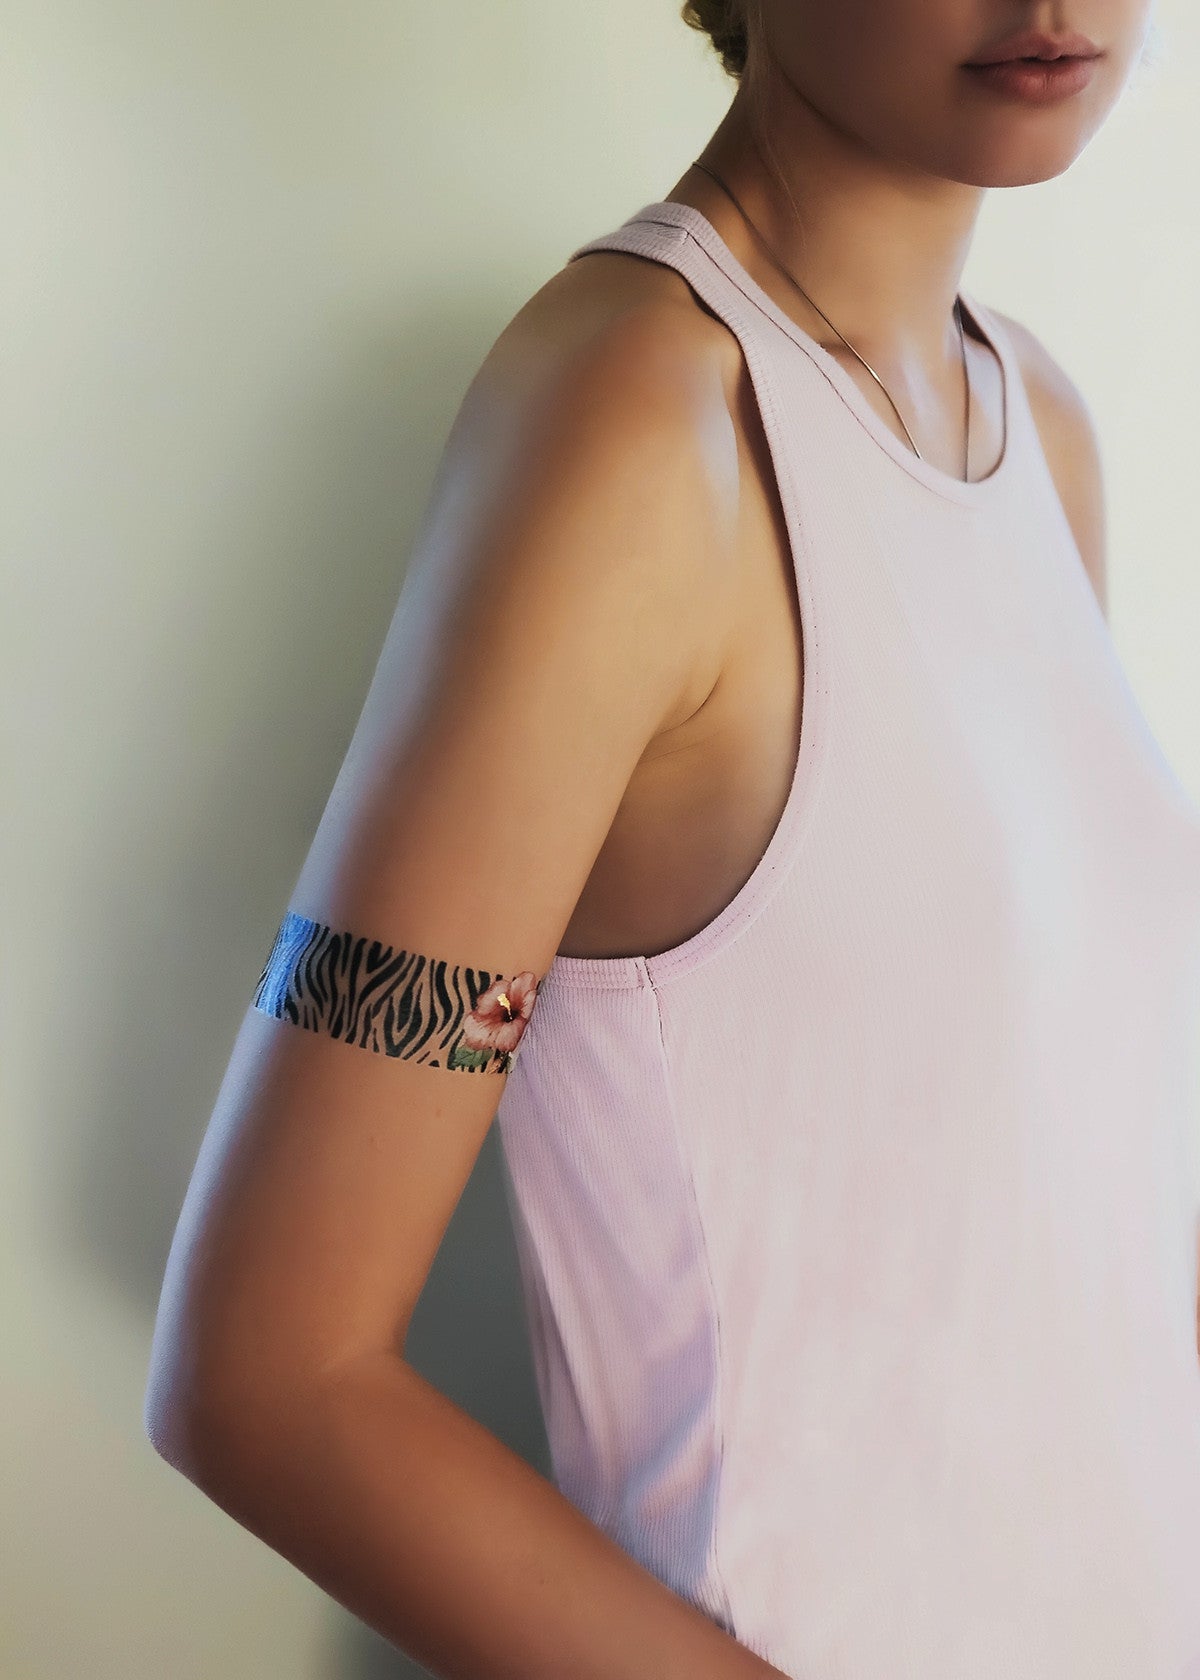 Superhero Hearts Valentine Bracelet Tattoo – Itty Bits Designs